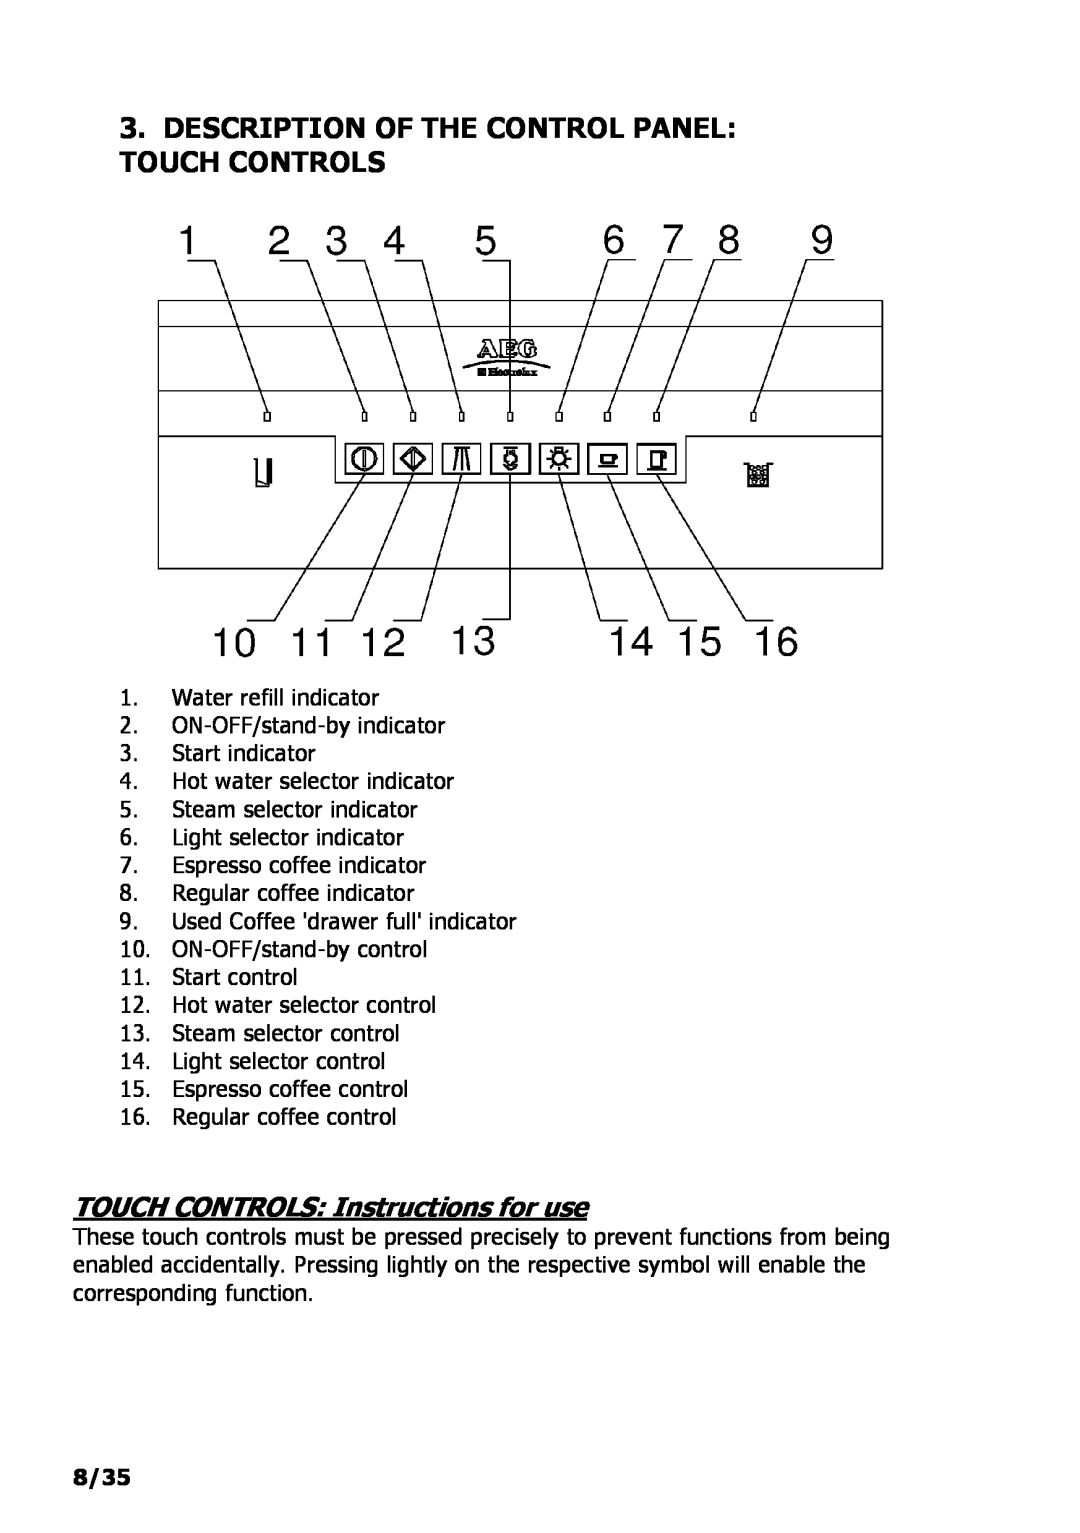 Electrolux PE 9038-m fww Description Of The Control Panel Touch Controls, TOUCH CONTROLS Instructions for use 